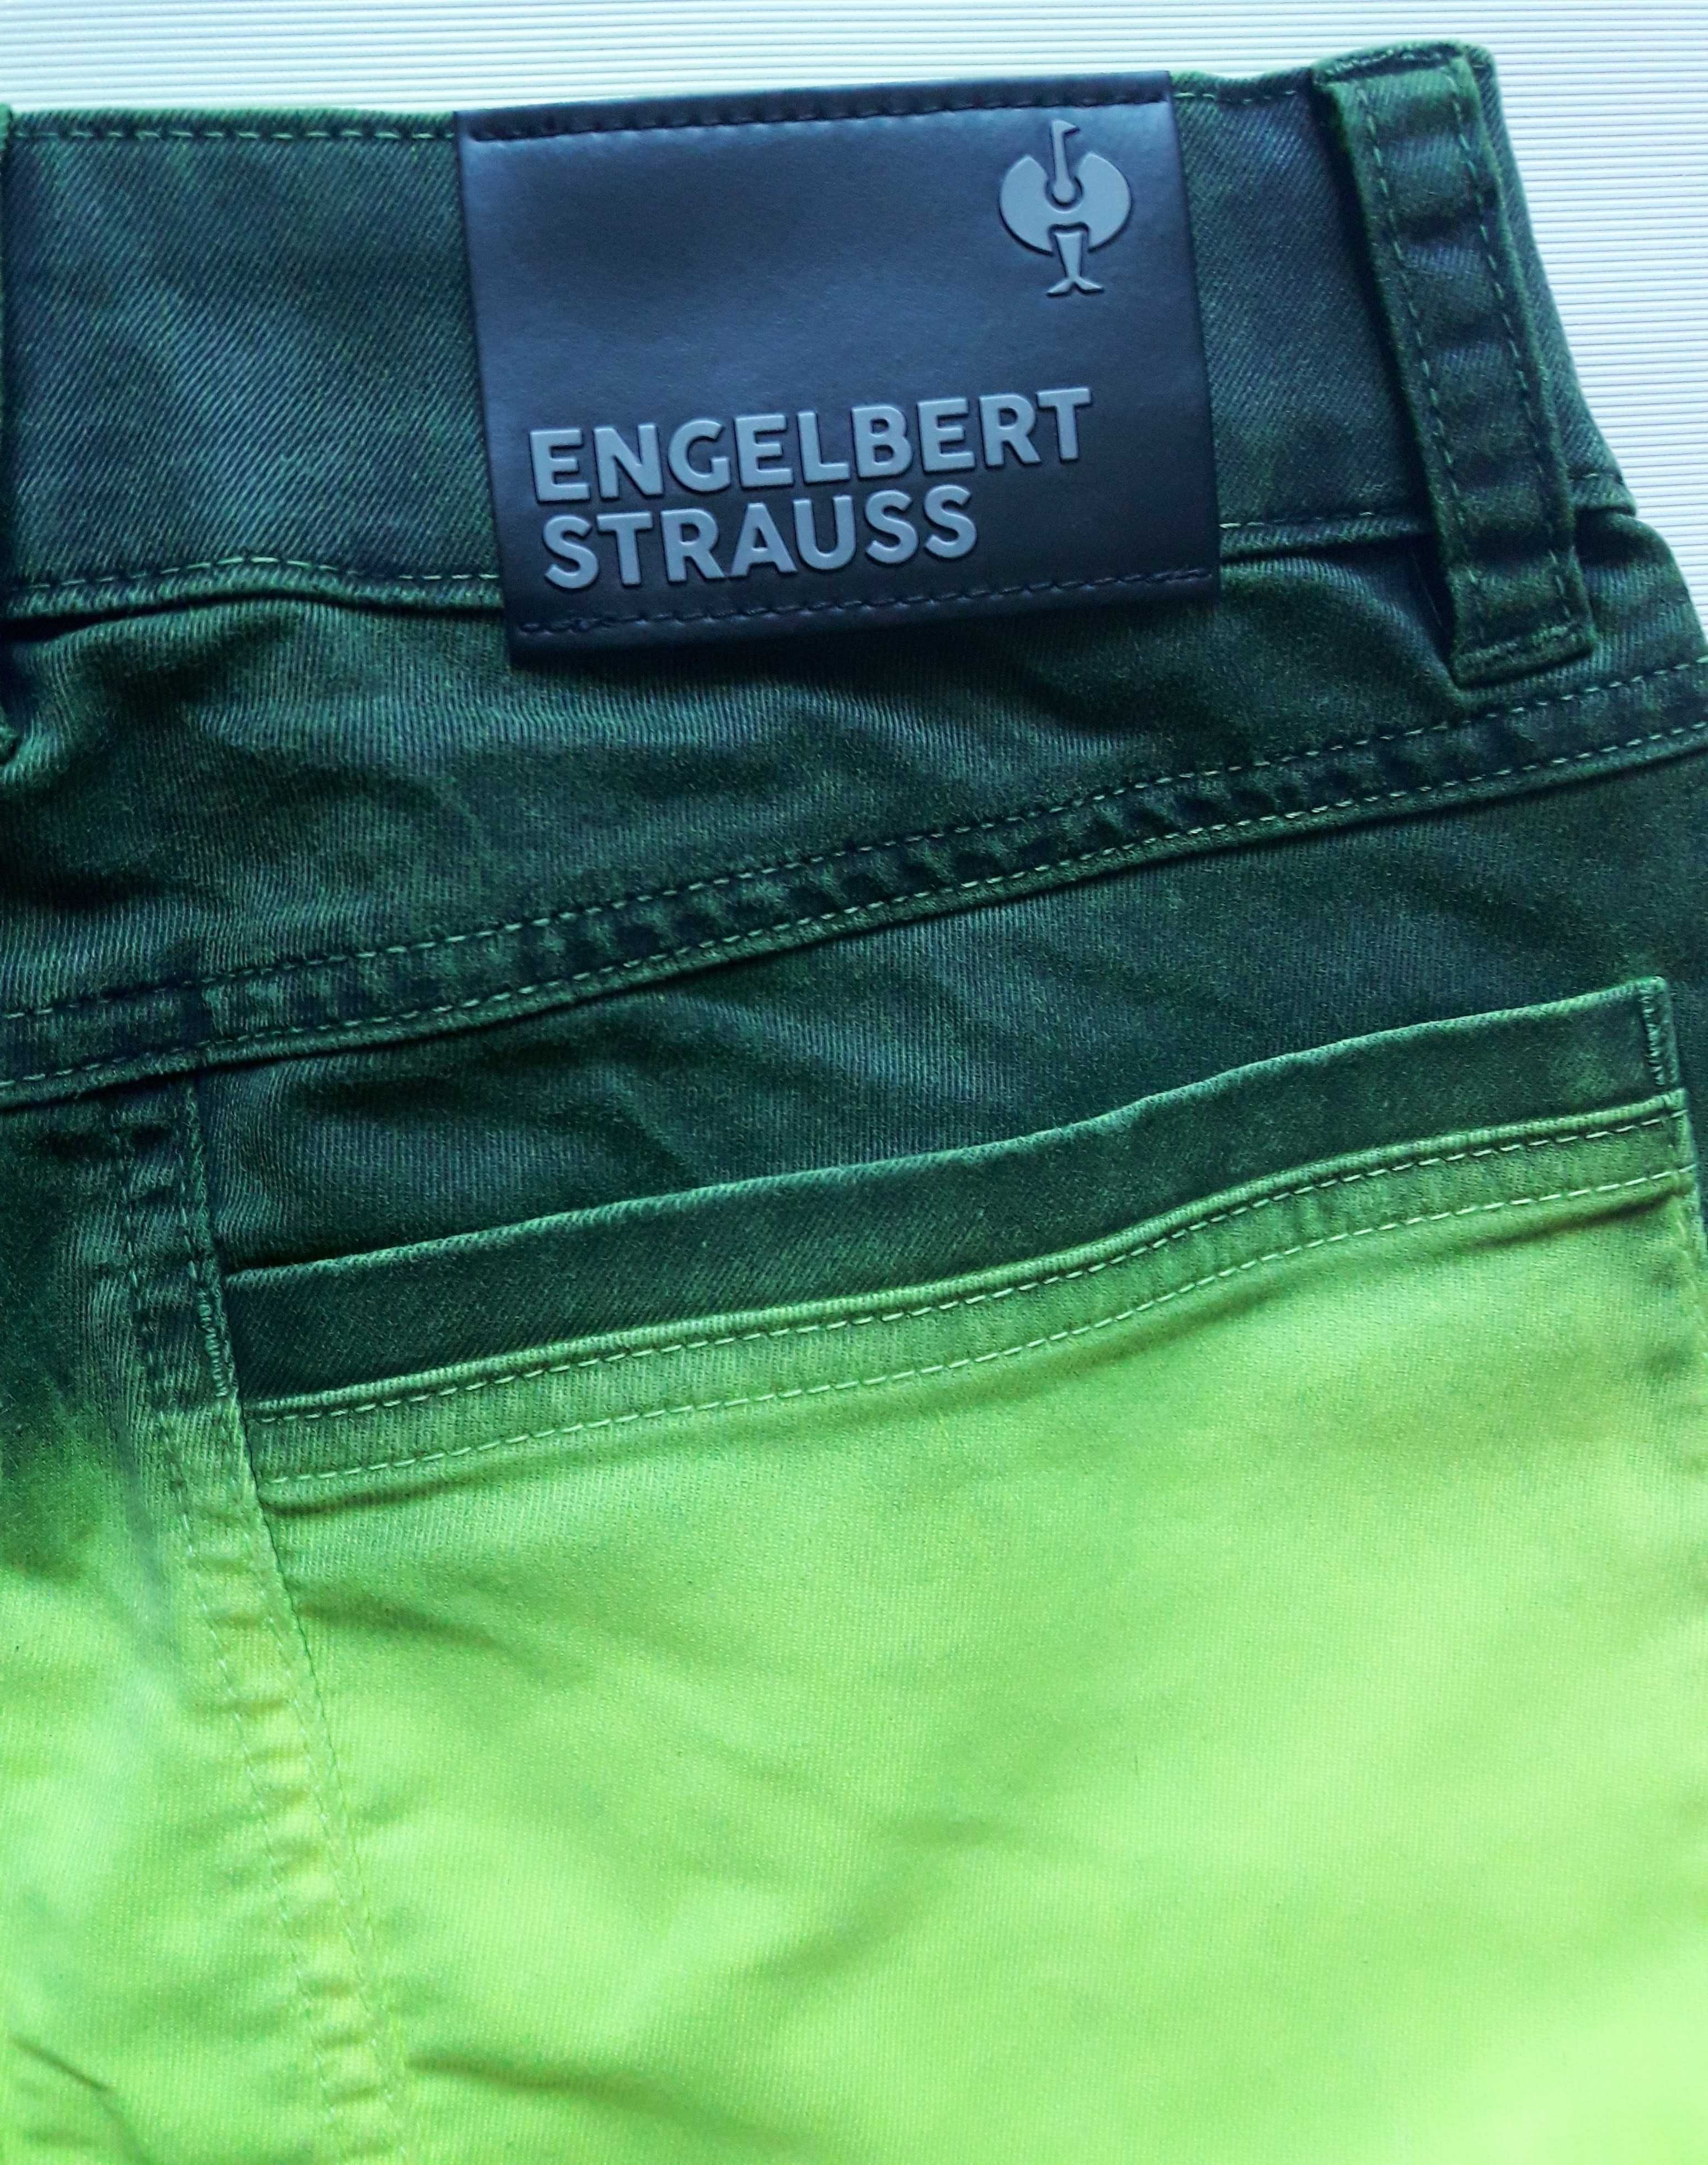 Робочі шорти Engelbert Strauss color sprayer (46)